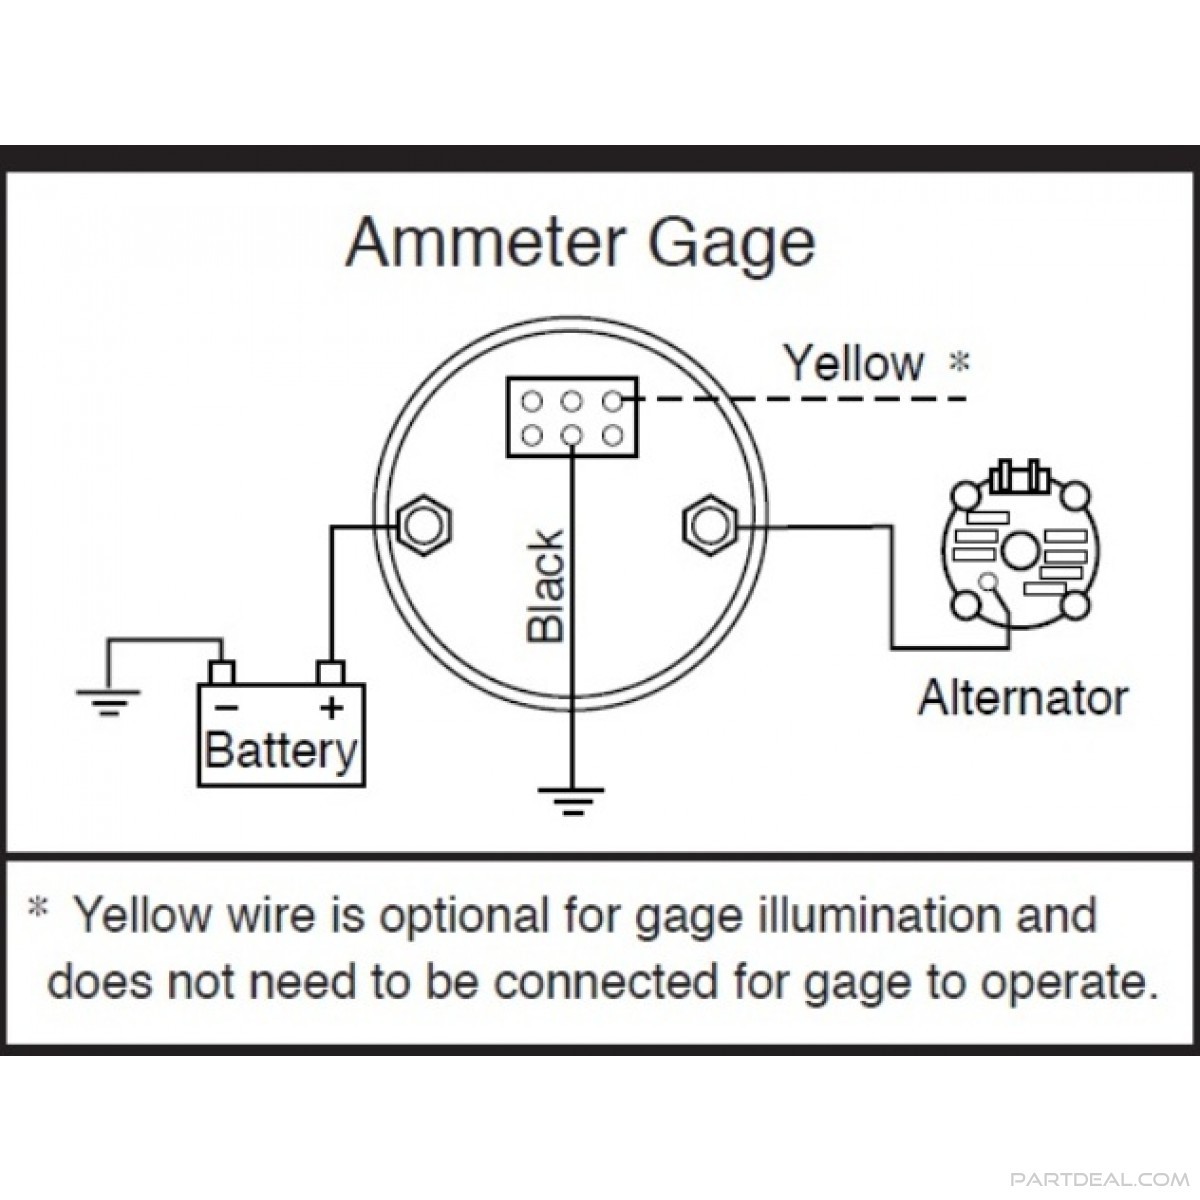 Ammeter Gauge Wiring Diagram Download Amp Gauge Wiring Diagram B2network Co 8 r